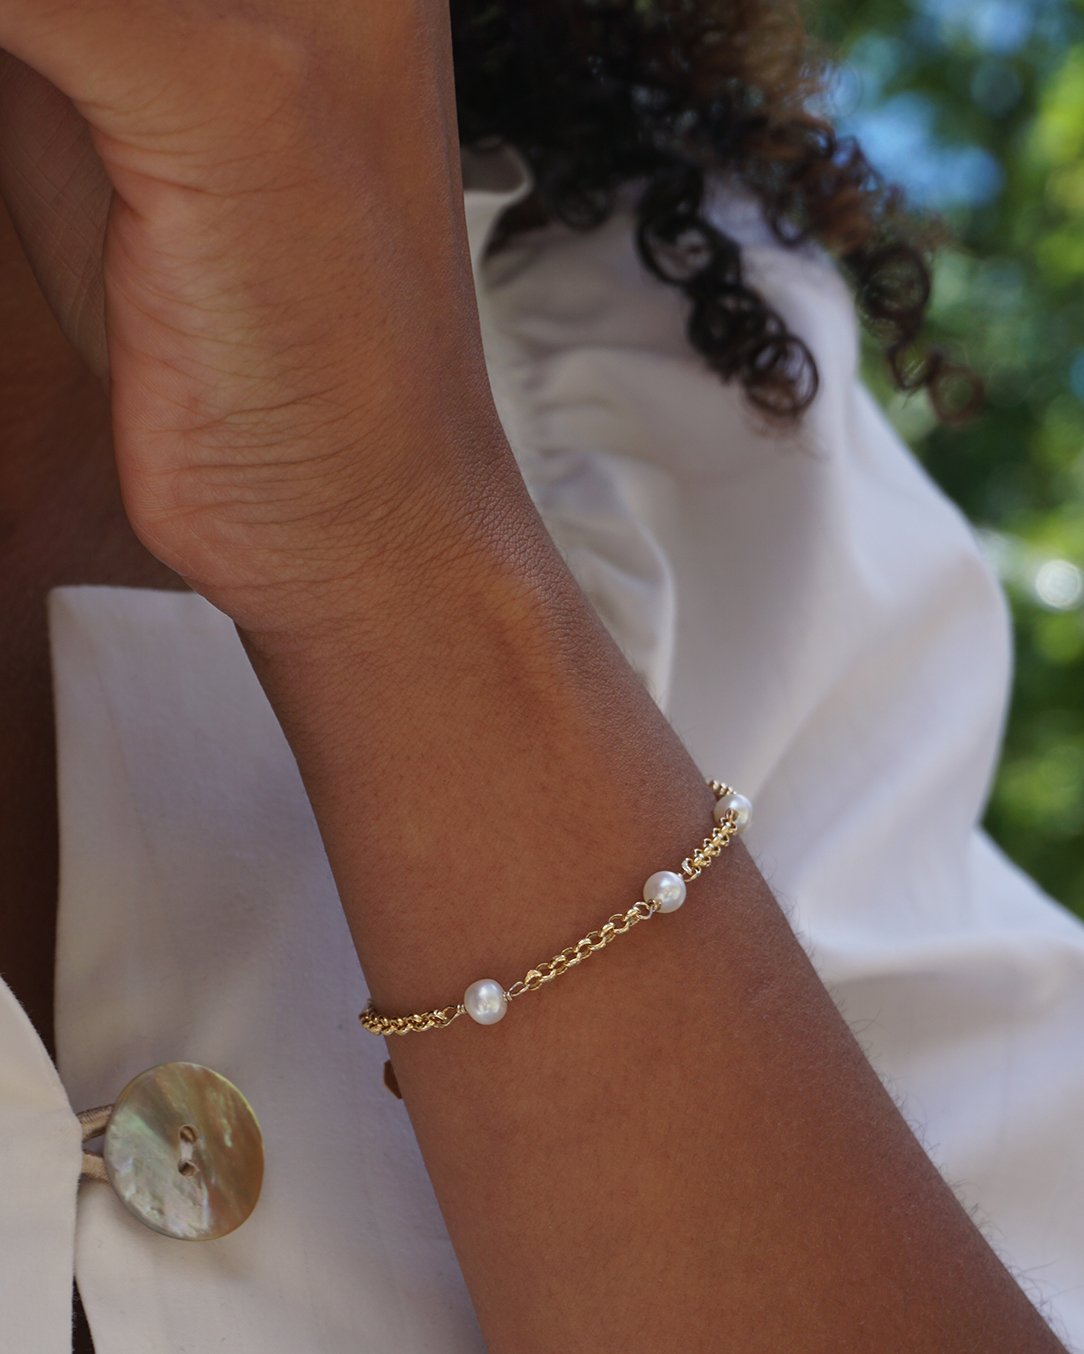 Pom-pom Bracelet in Yellow Gold with White Pearls